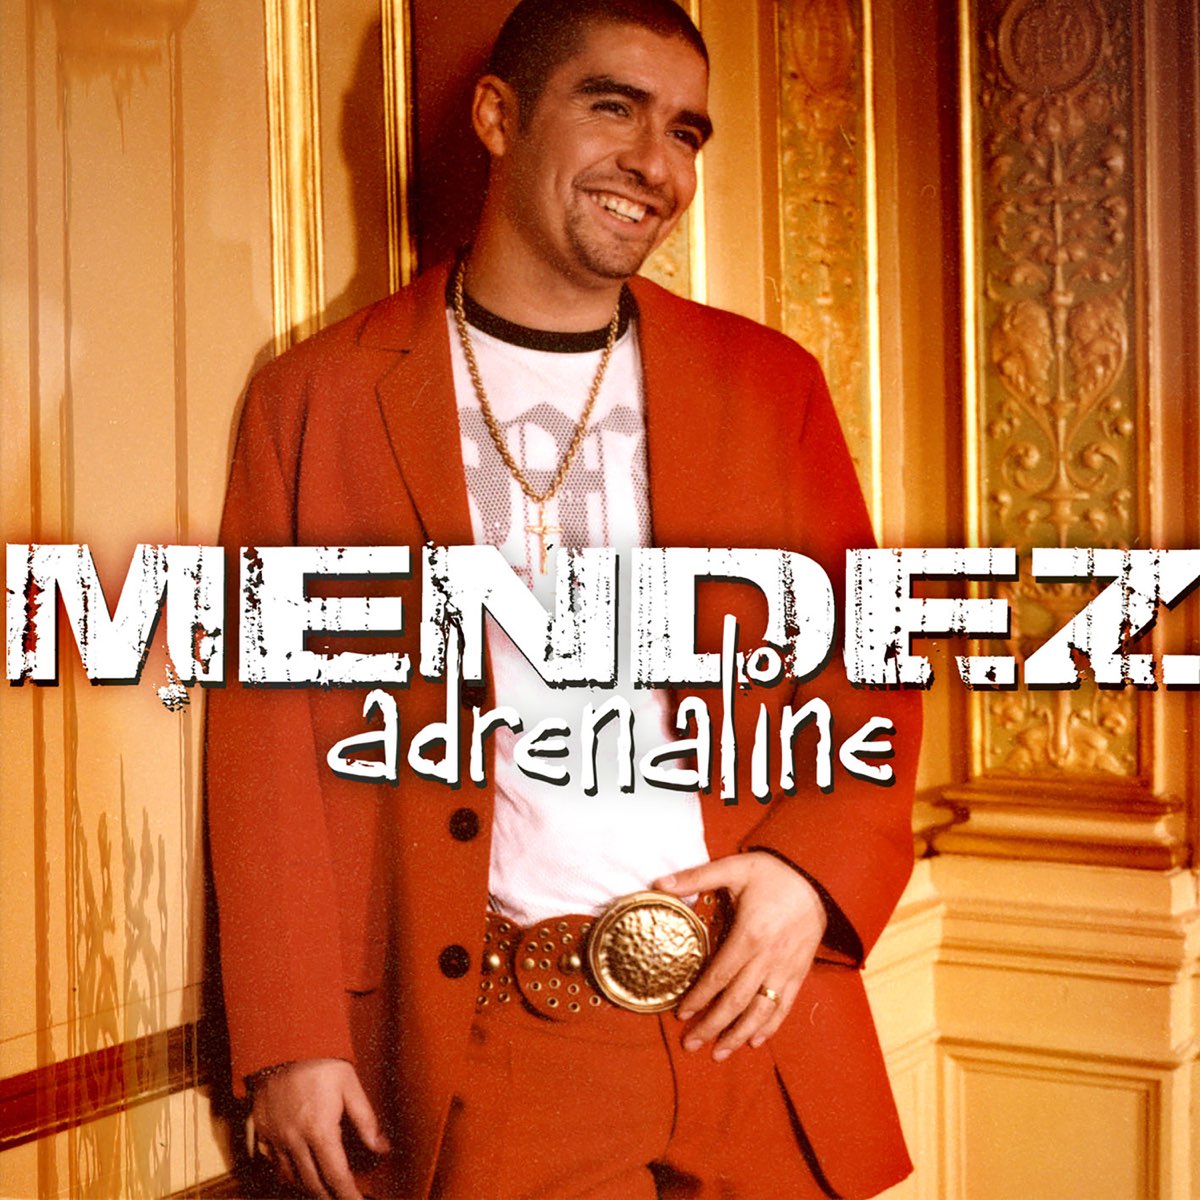 Adrenaline - EP de Mendez en Apple Music